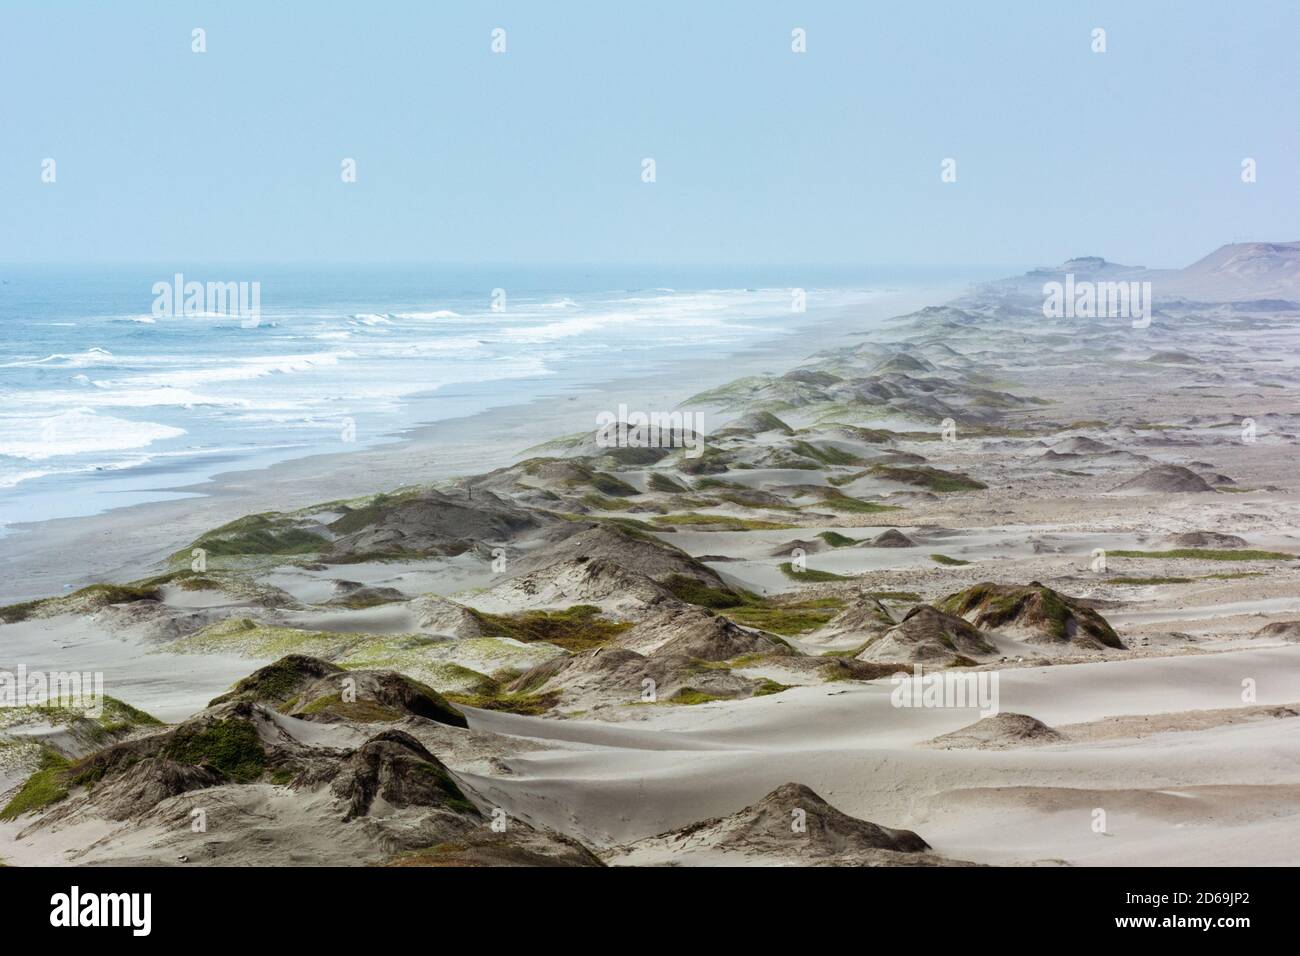 The desert coastal landscape of northern Peru seen here at Poemape in the La Libertad region. Stock Photo